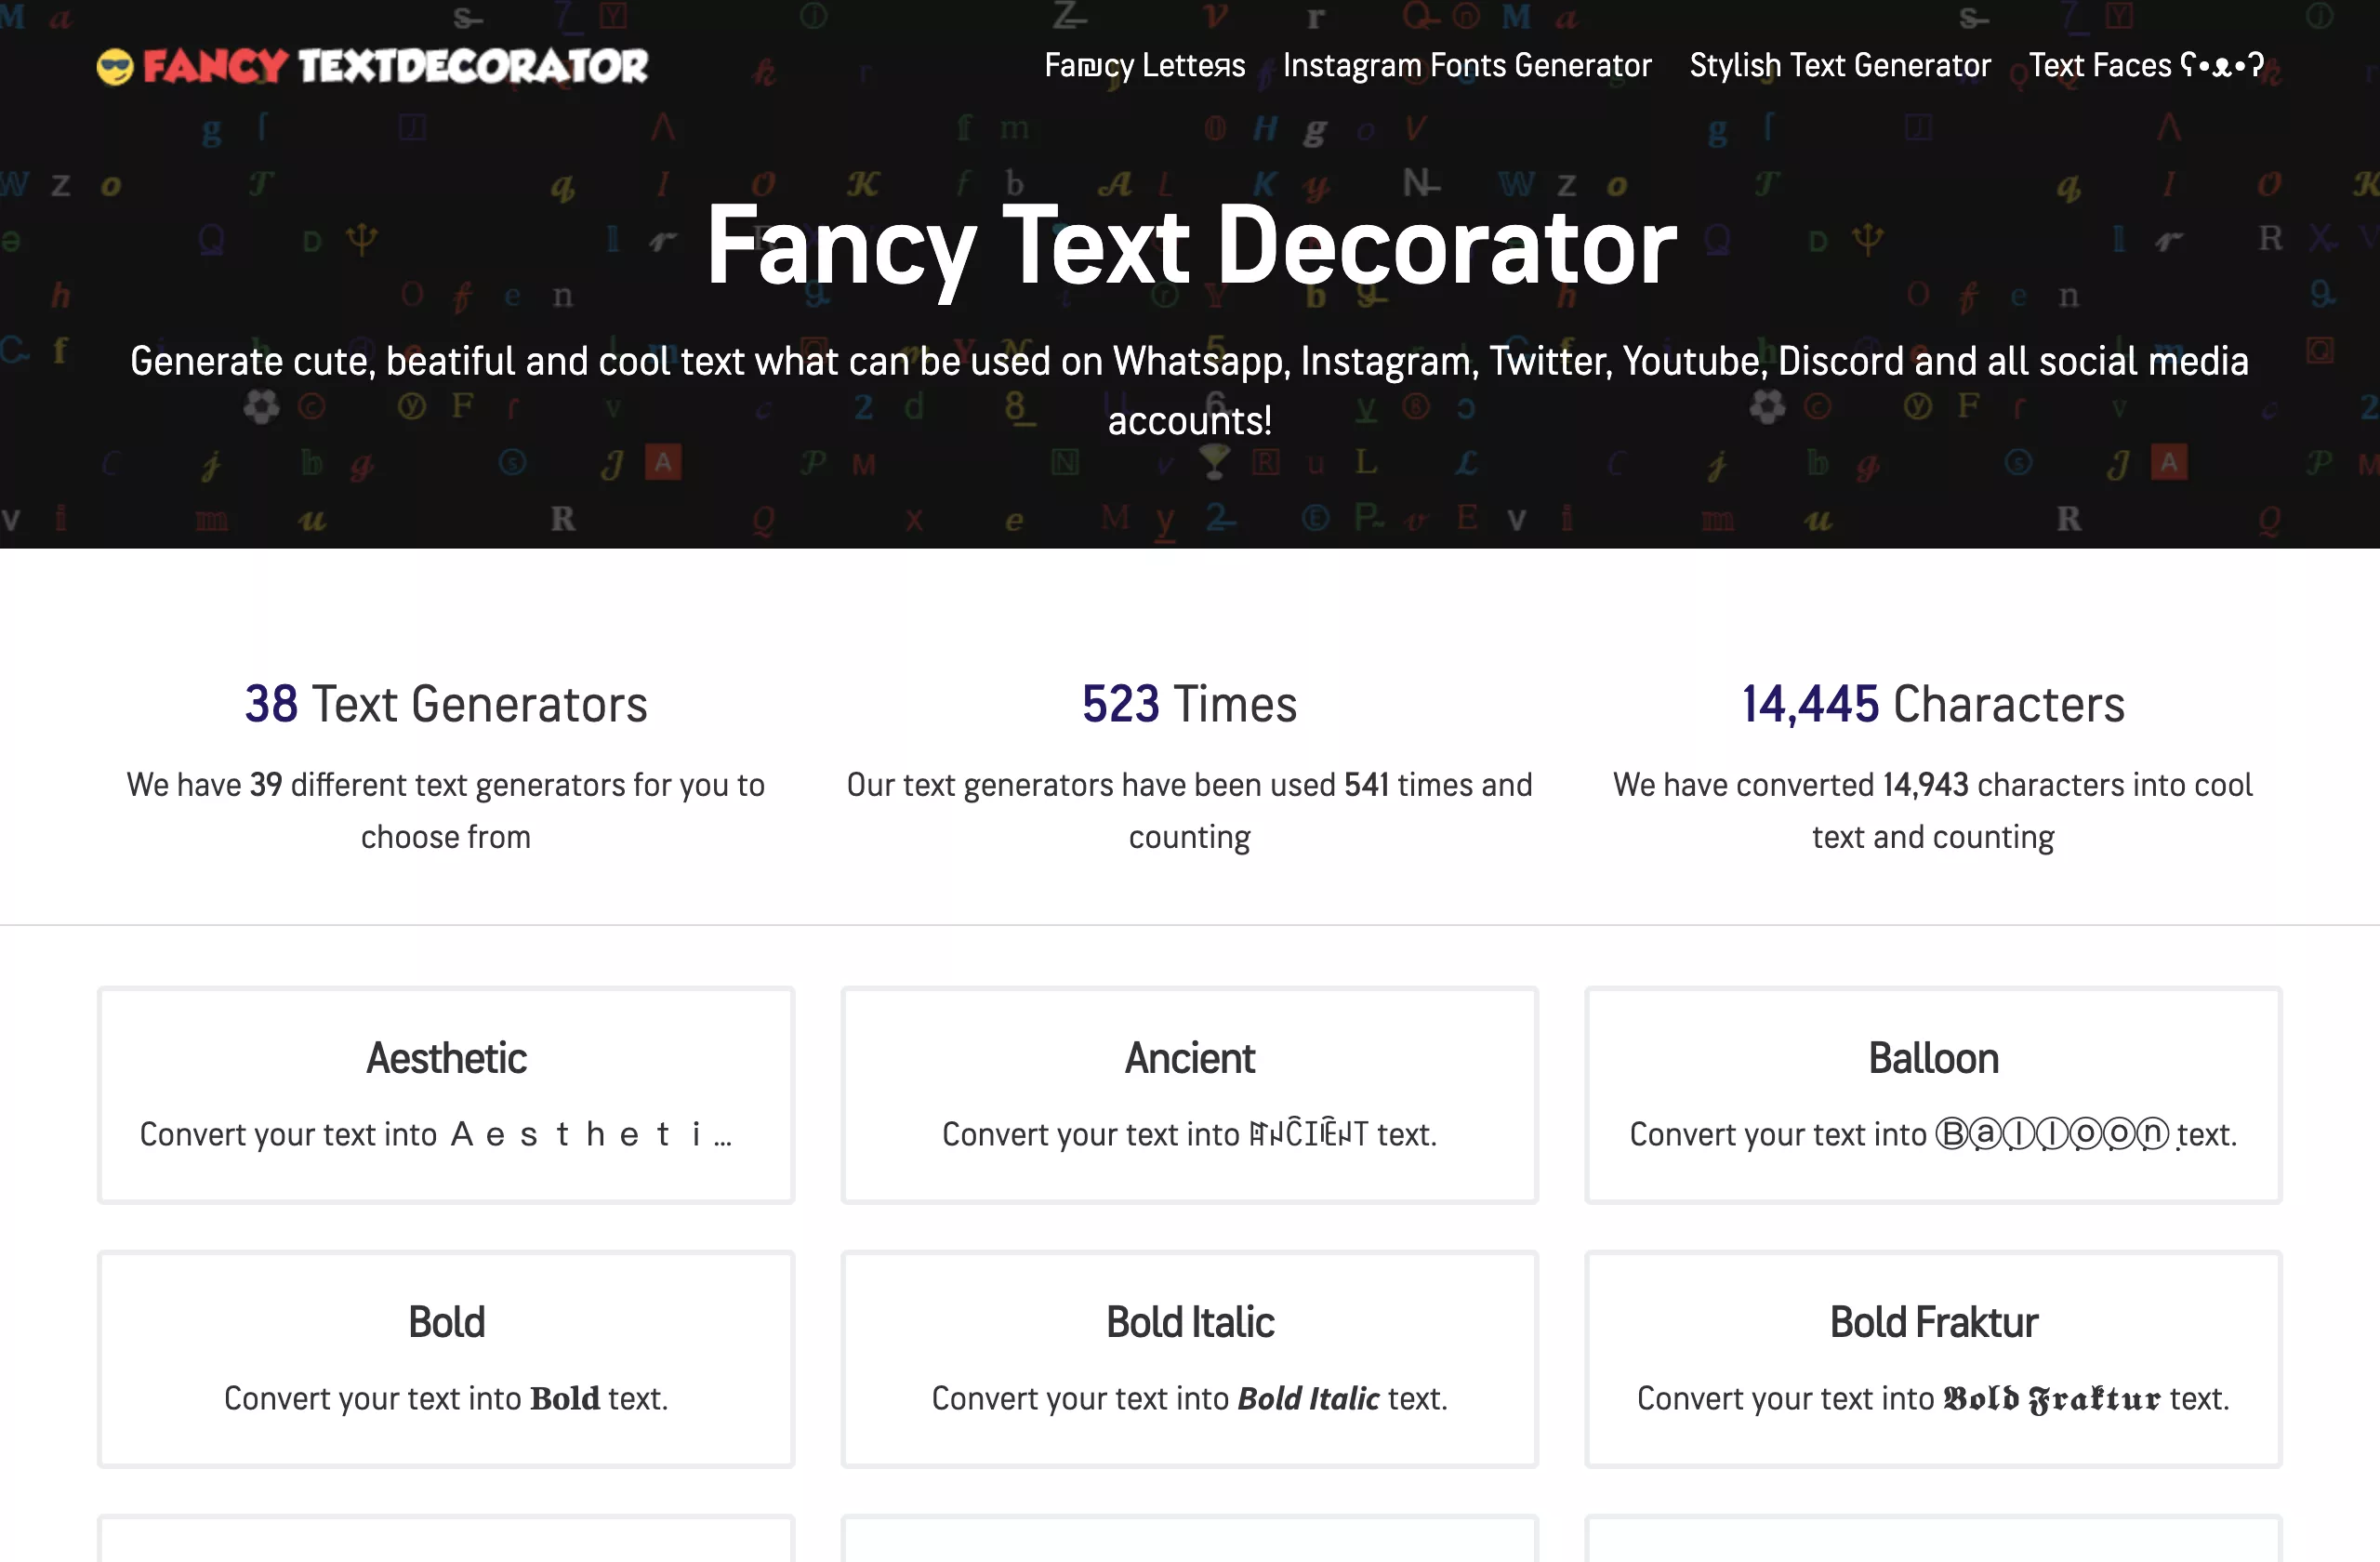 Fancy Text Decorator